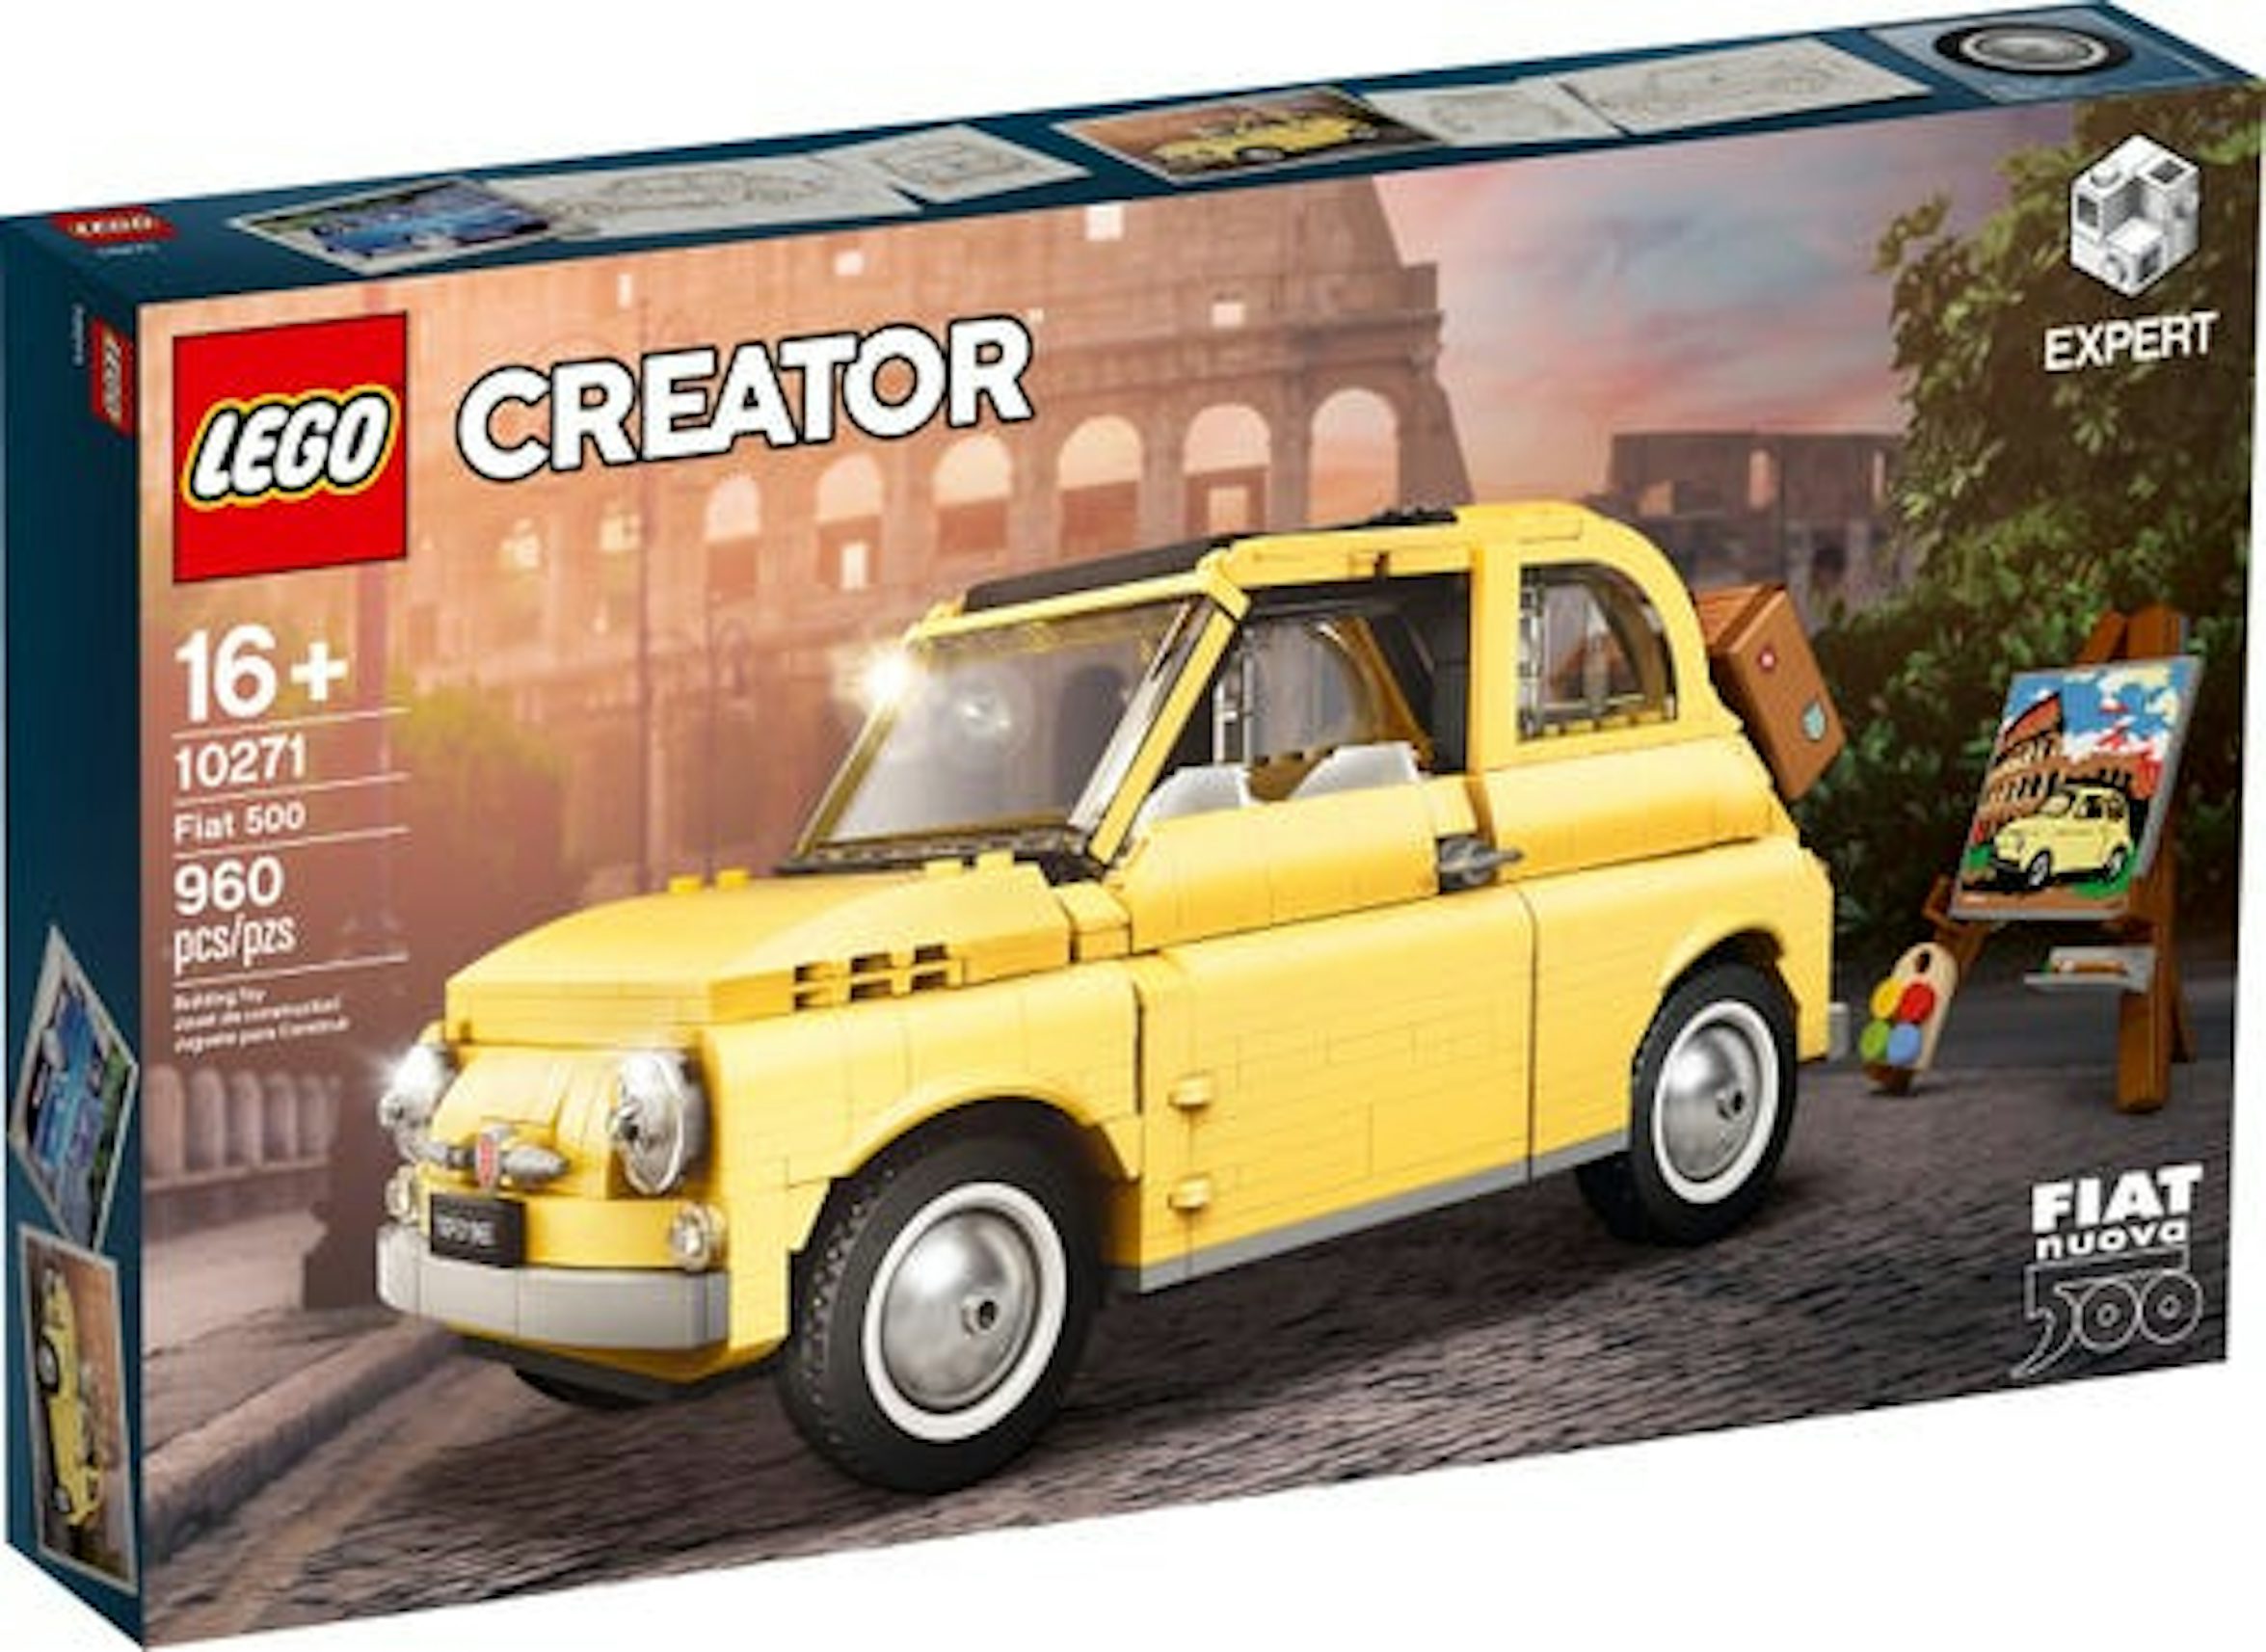 LEGO Creator Fiat 500 Set 10271 - US